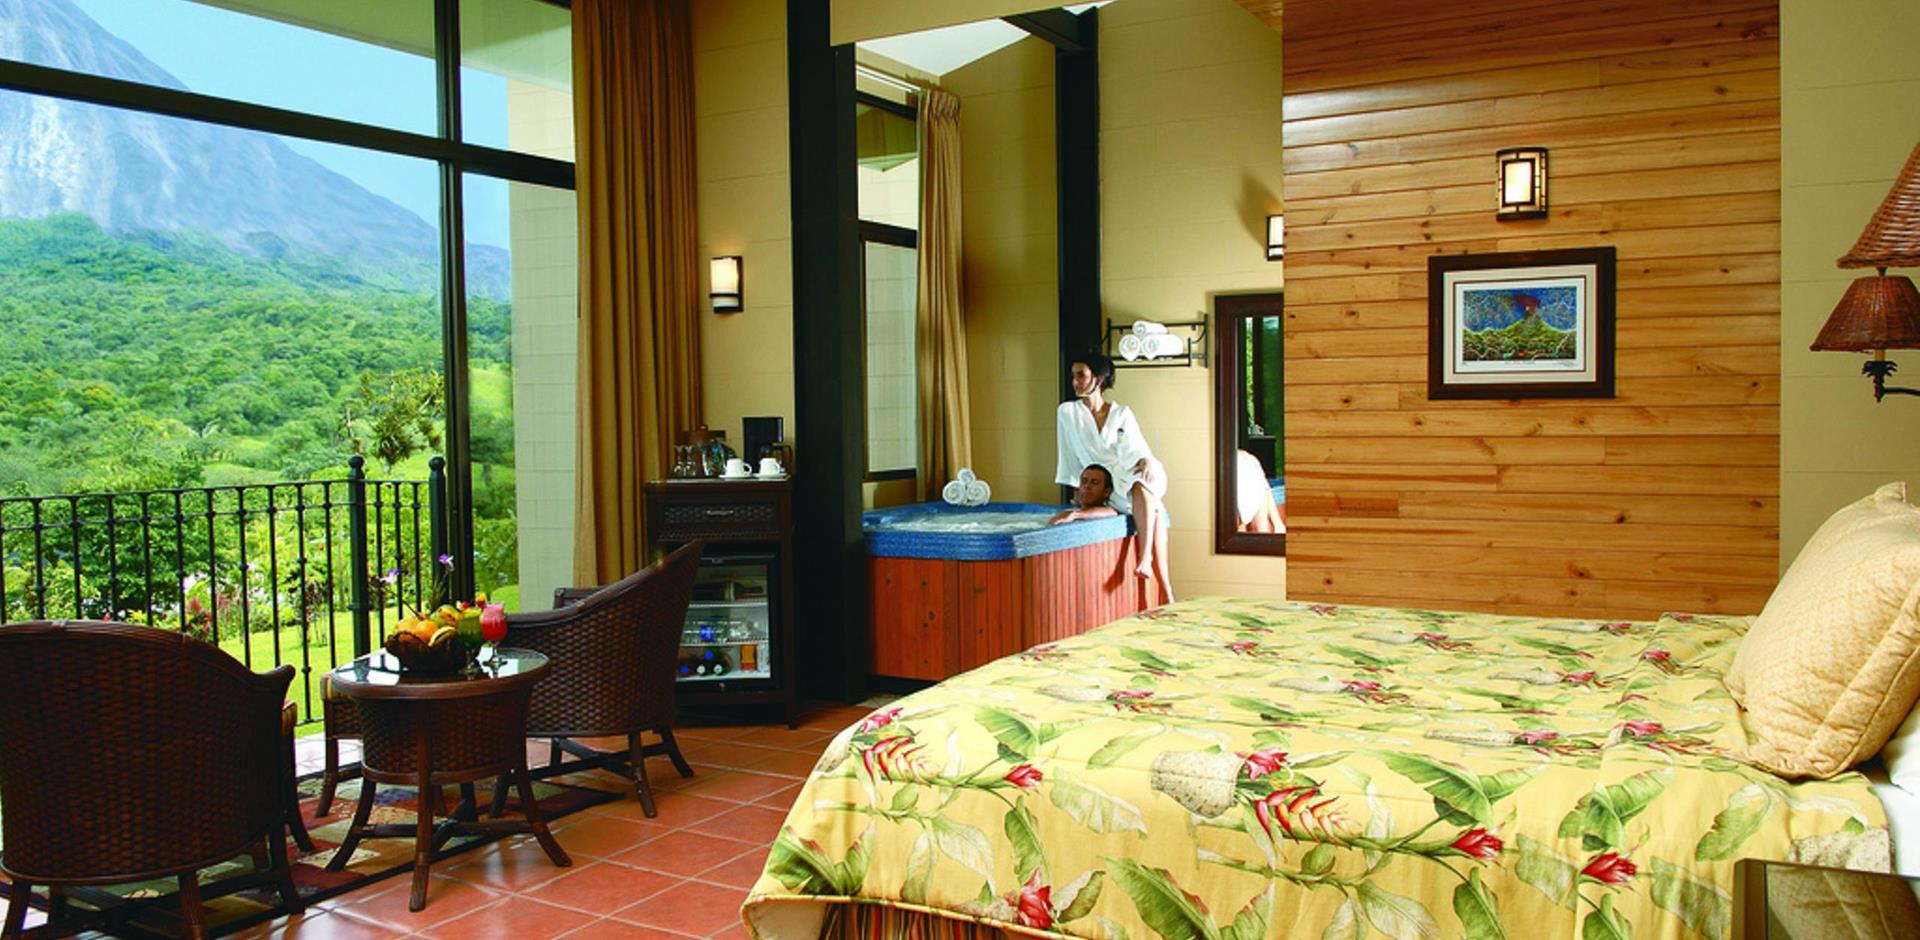 Bedroom, Arenal Kioro, Costa Rica